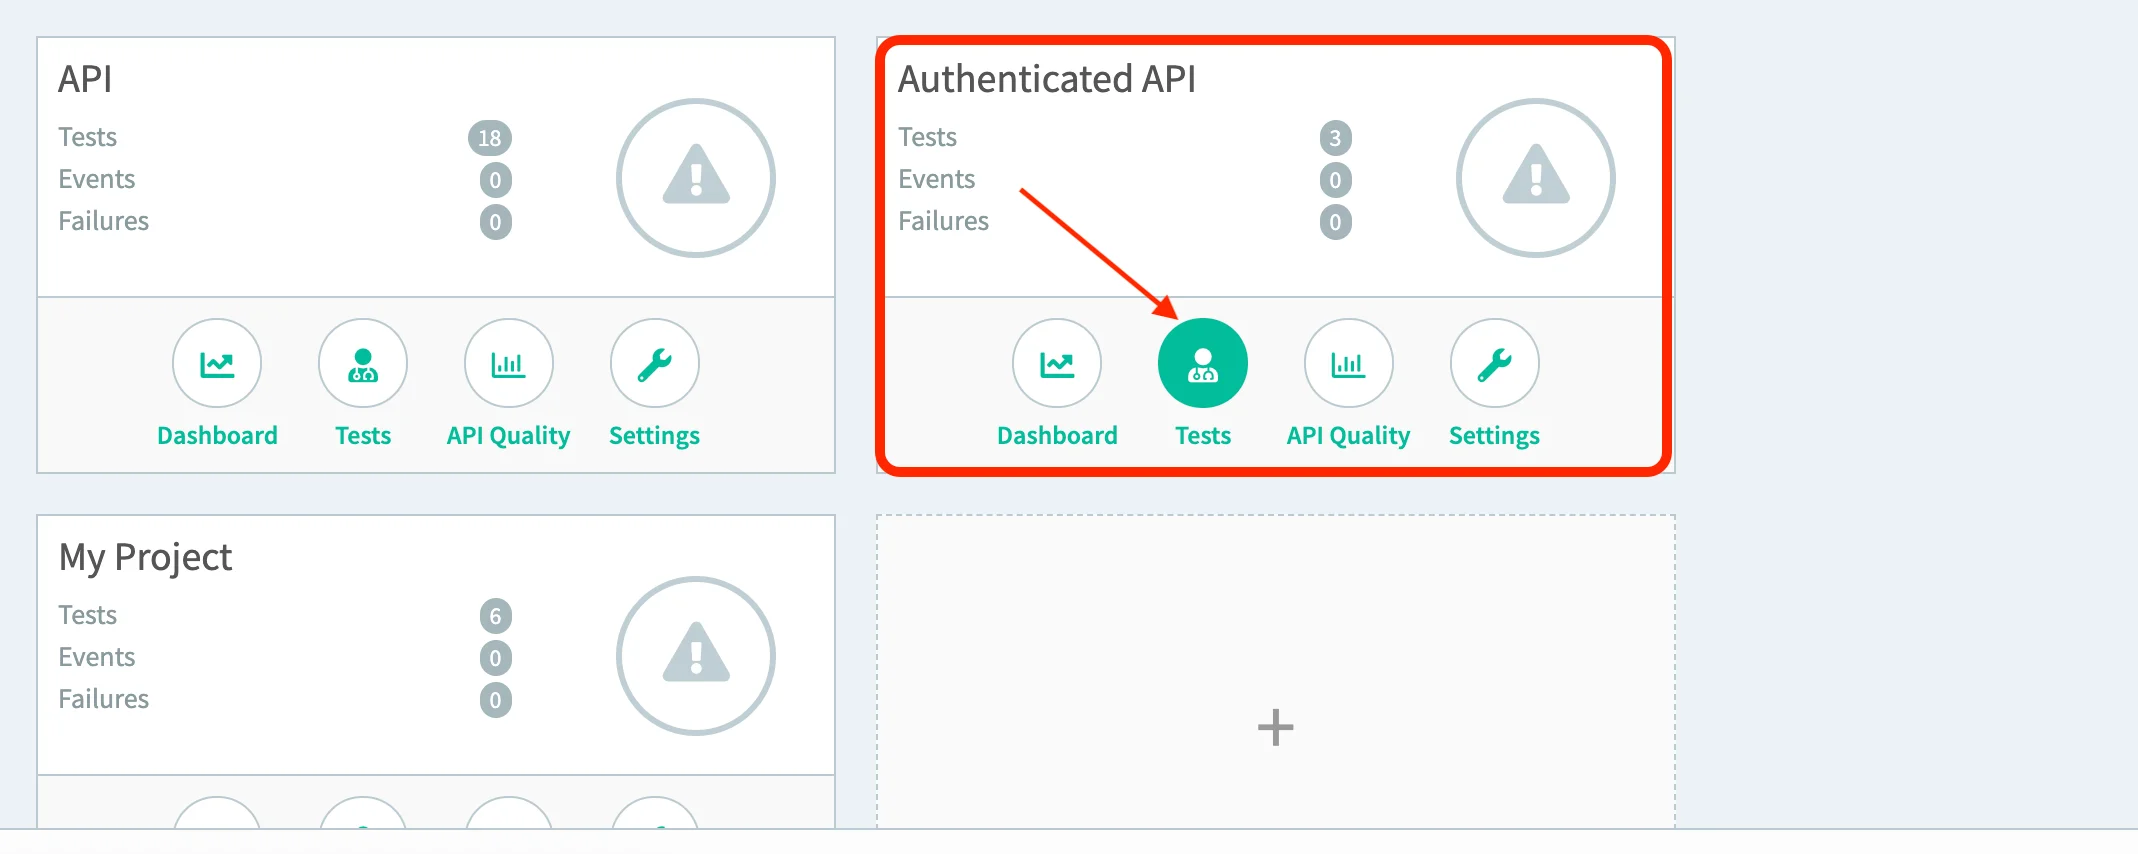 Authenticated API